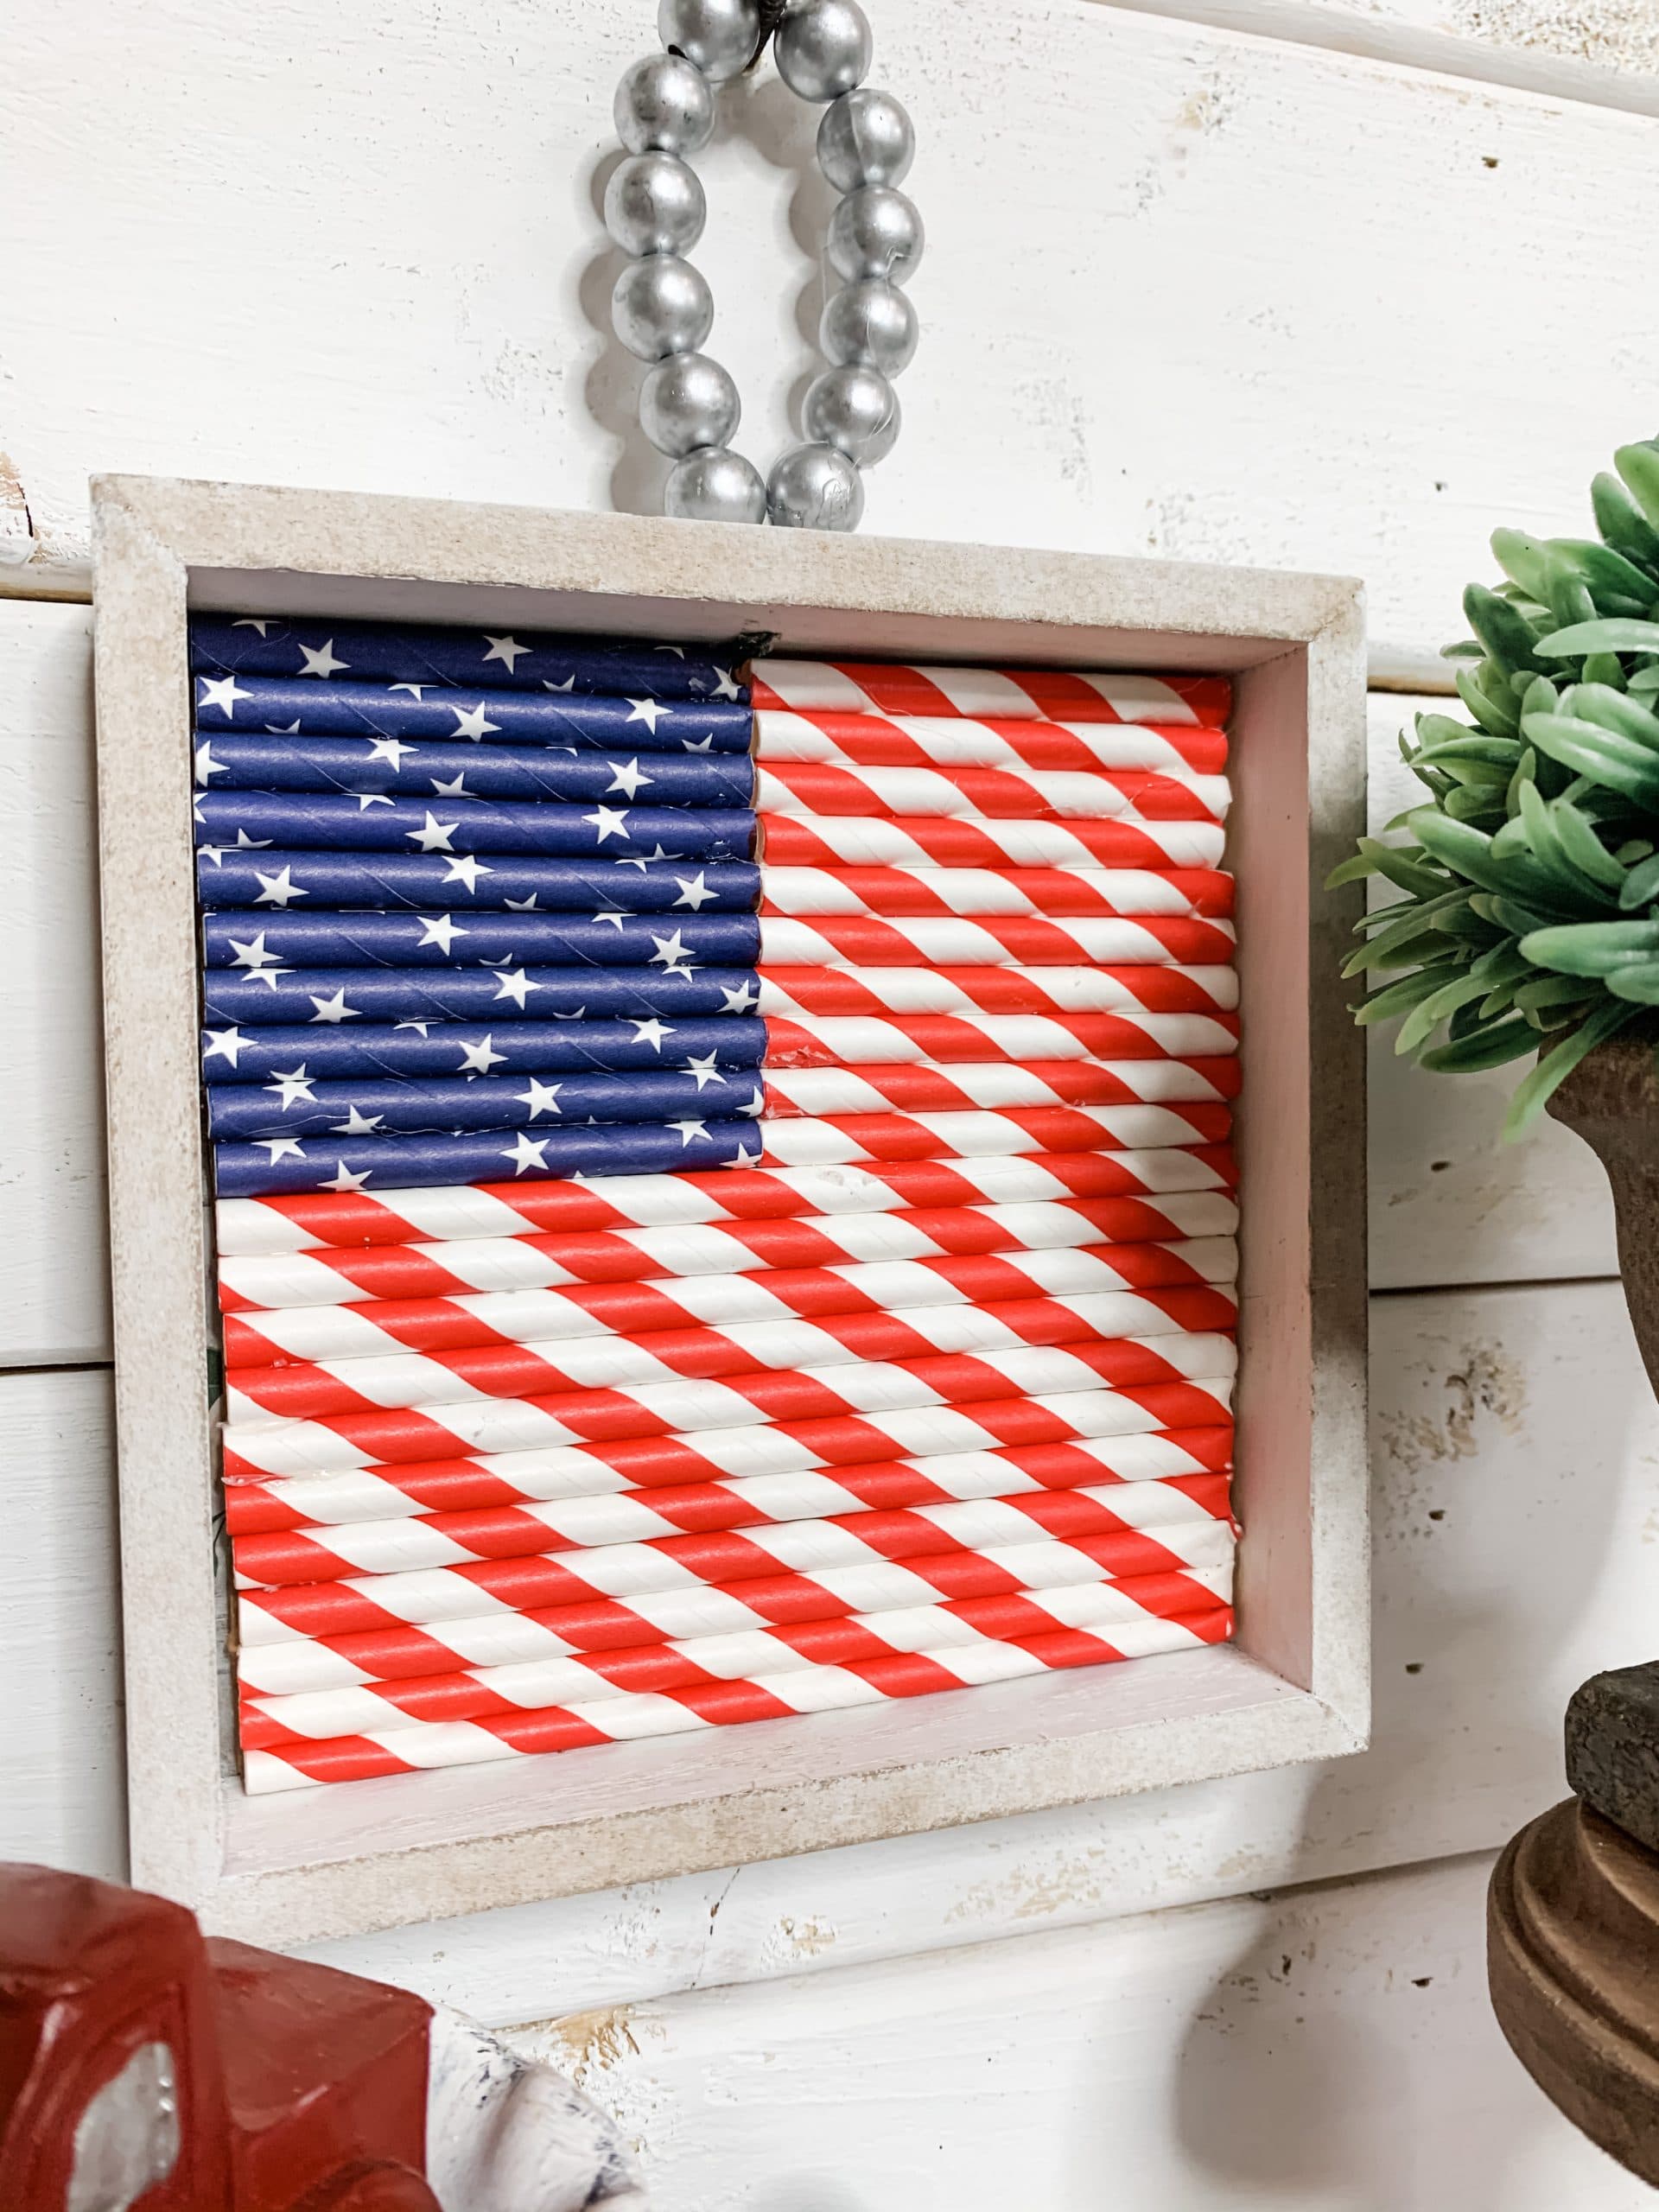 DIY Dollar Tree American Flag Decor